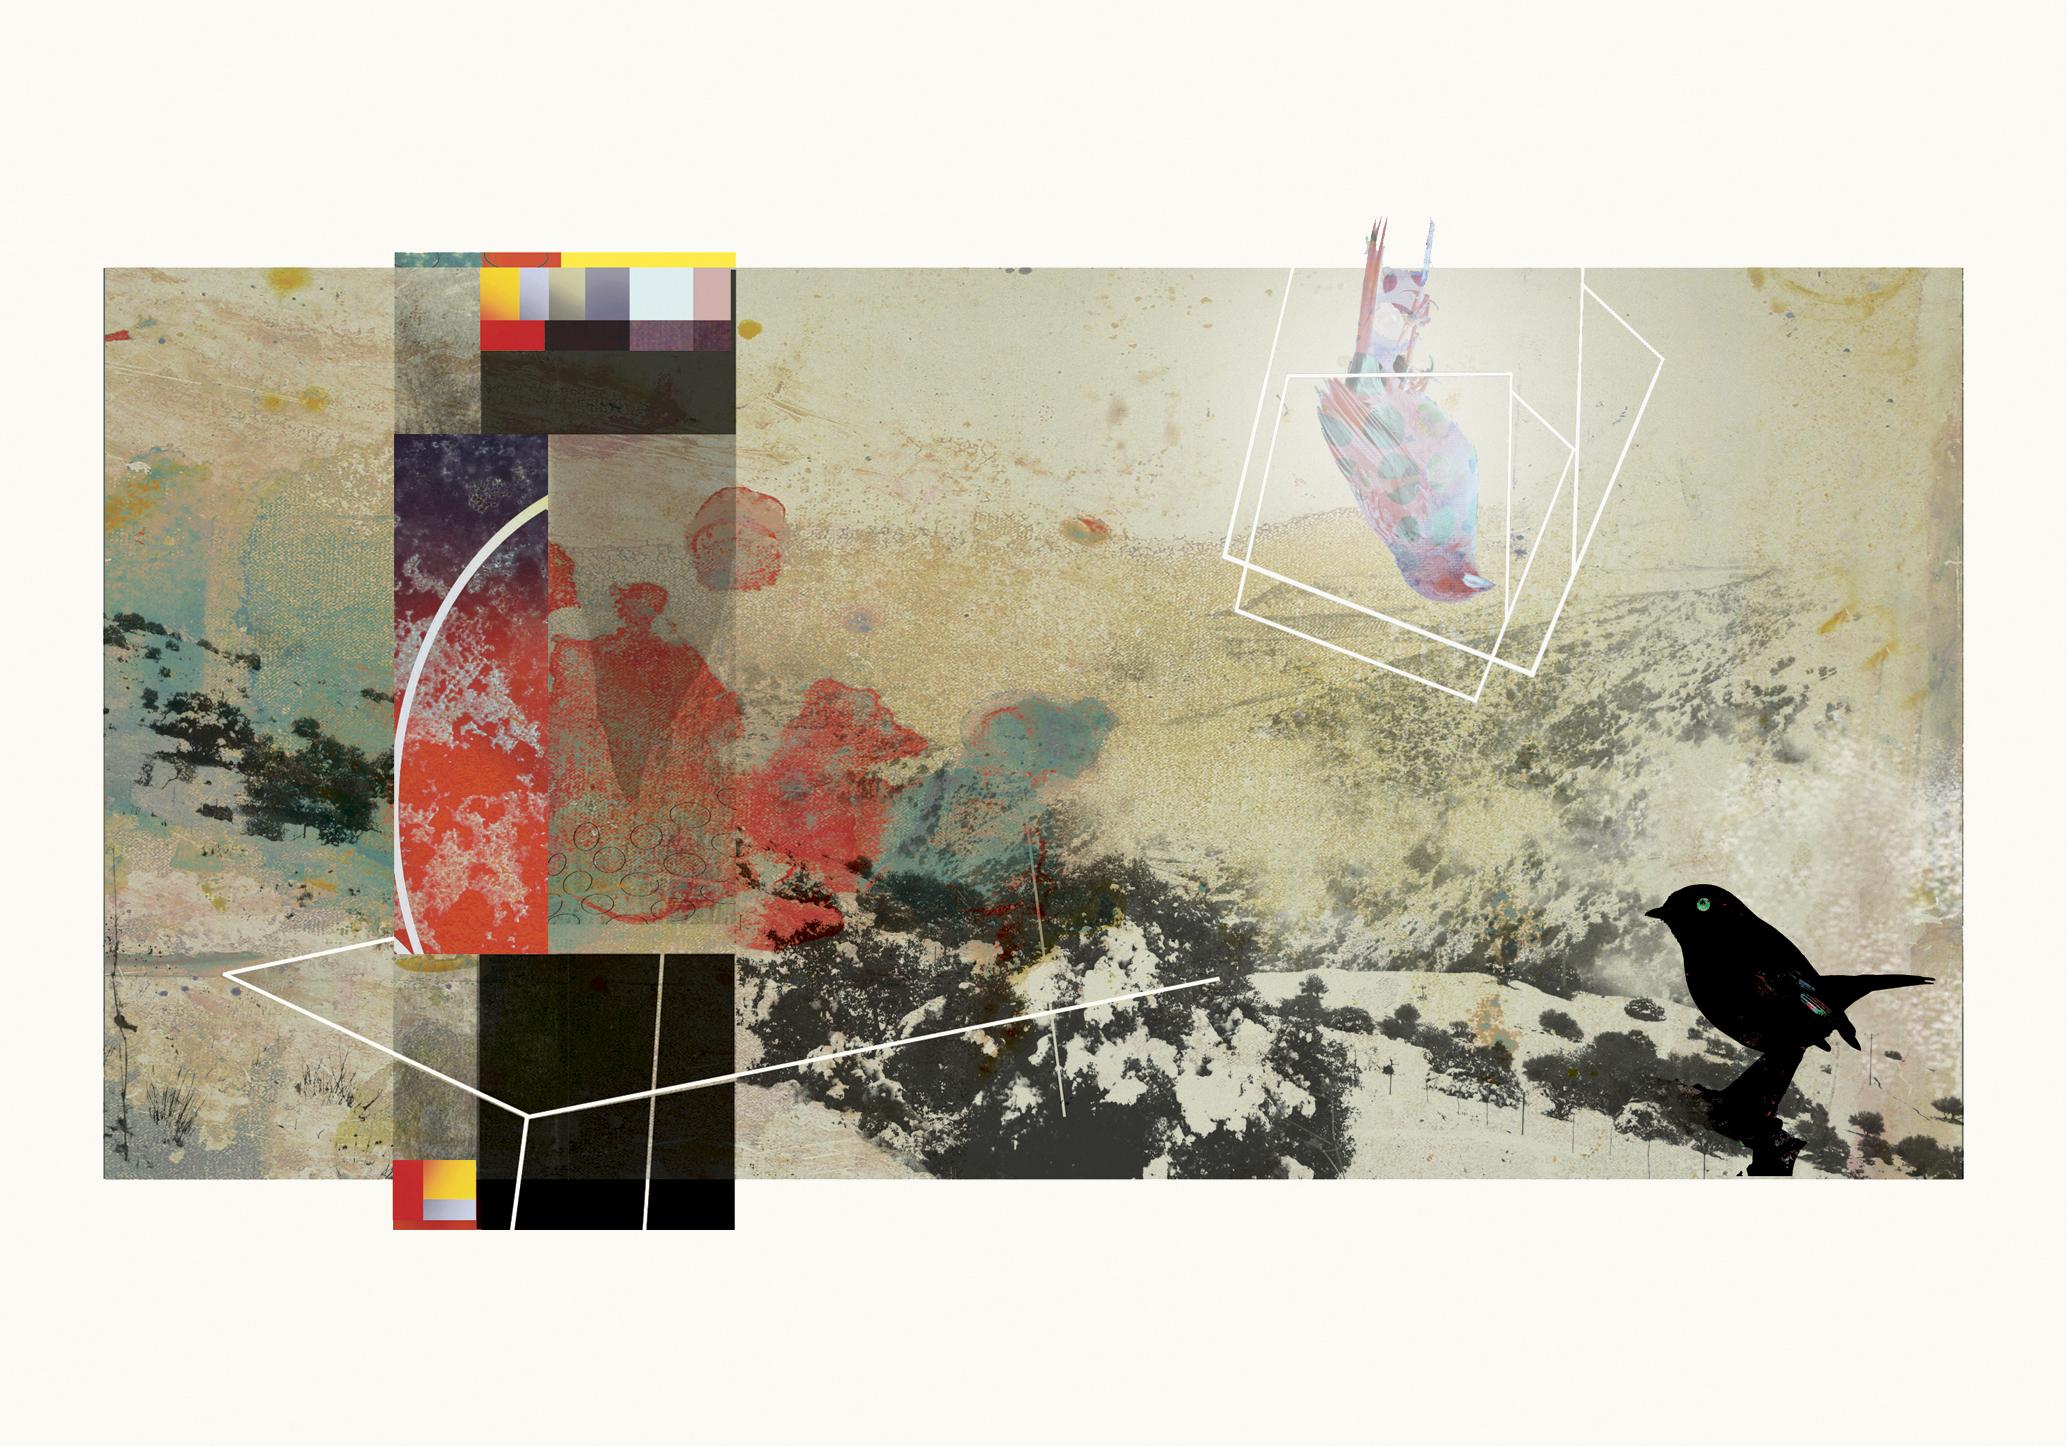 Francisco Nicolás Abstract Print - Mountain 3 - Contemporary, Abstract, Pop art, Surrealist, geometric, landscape 